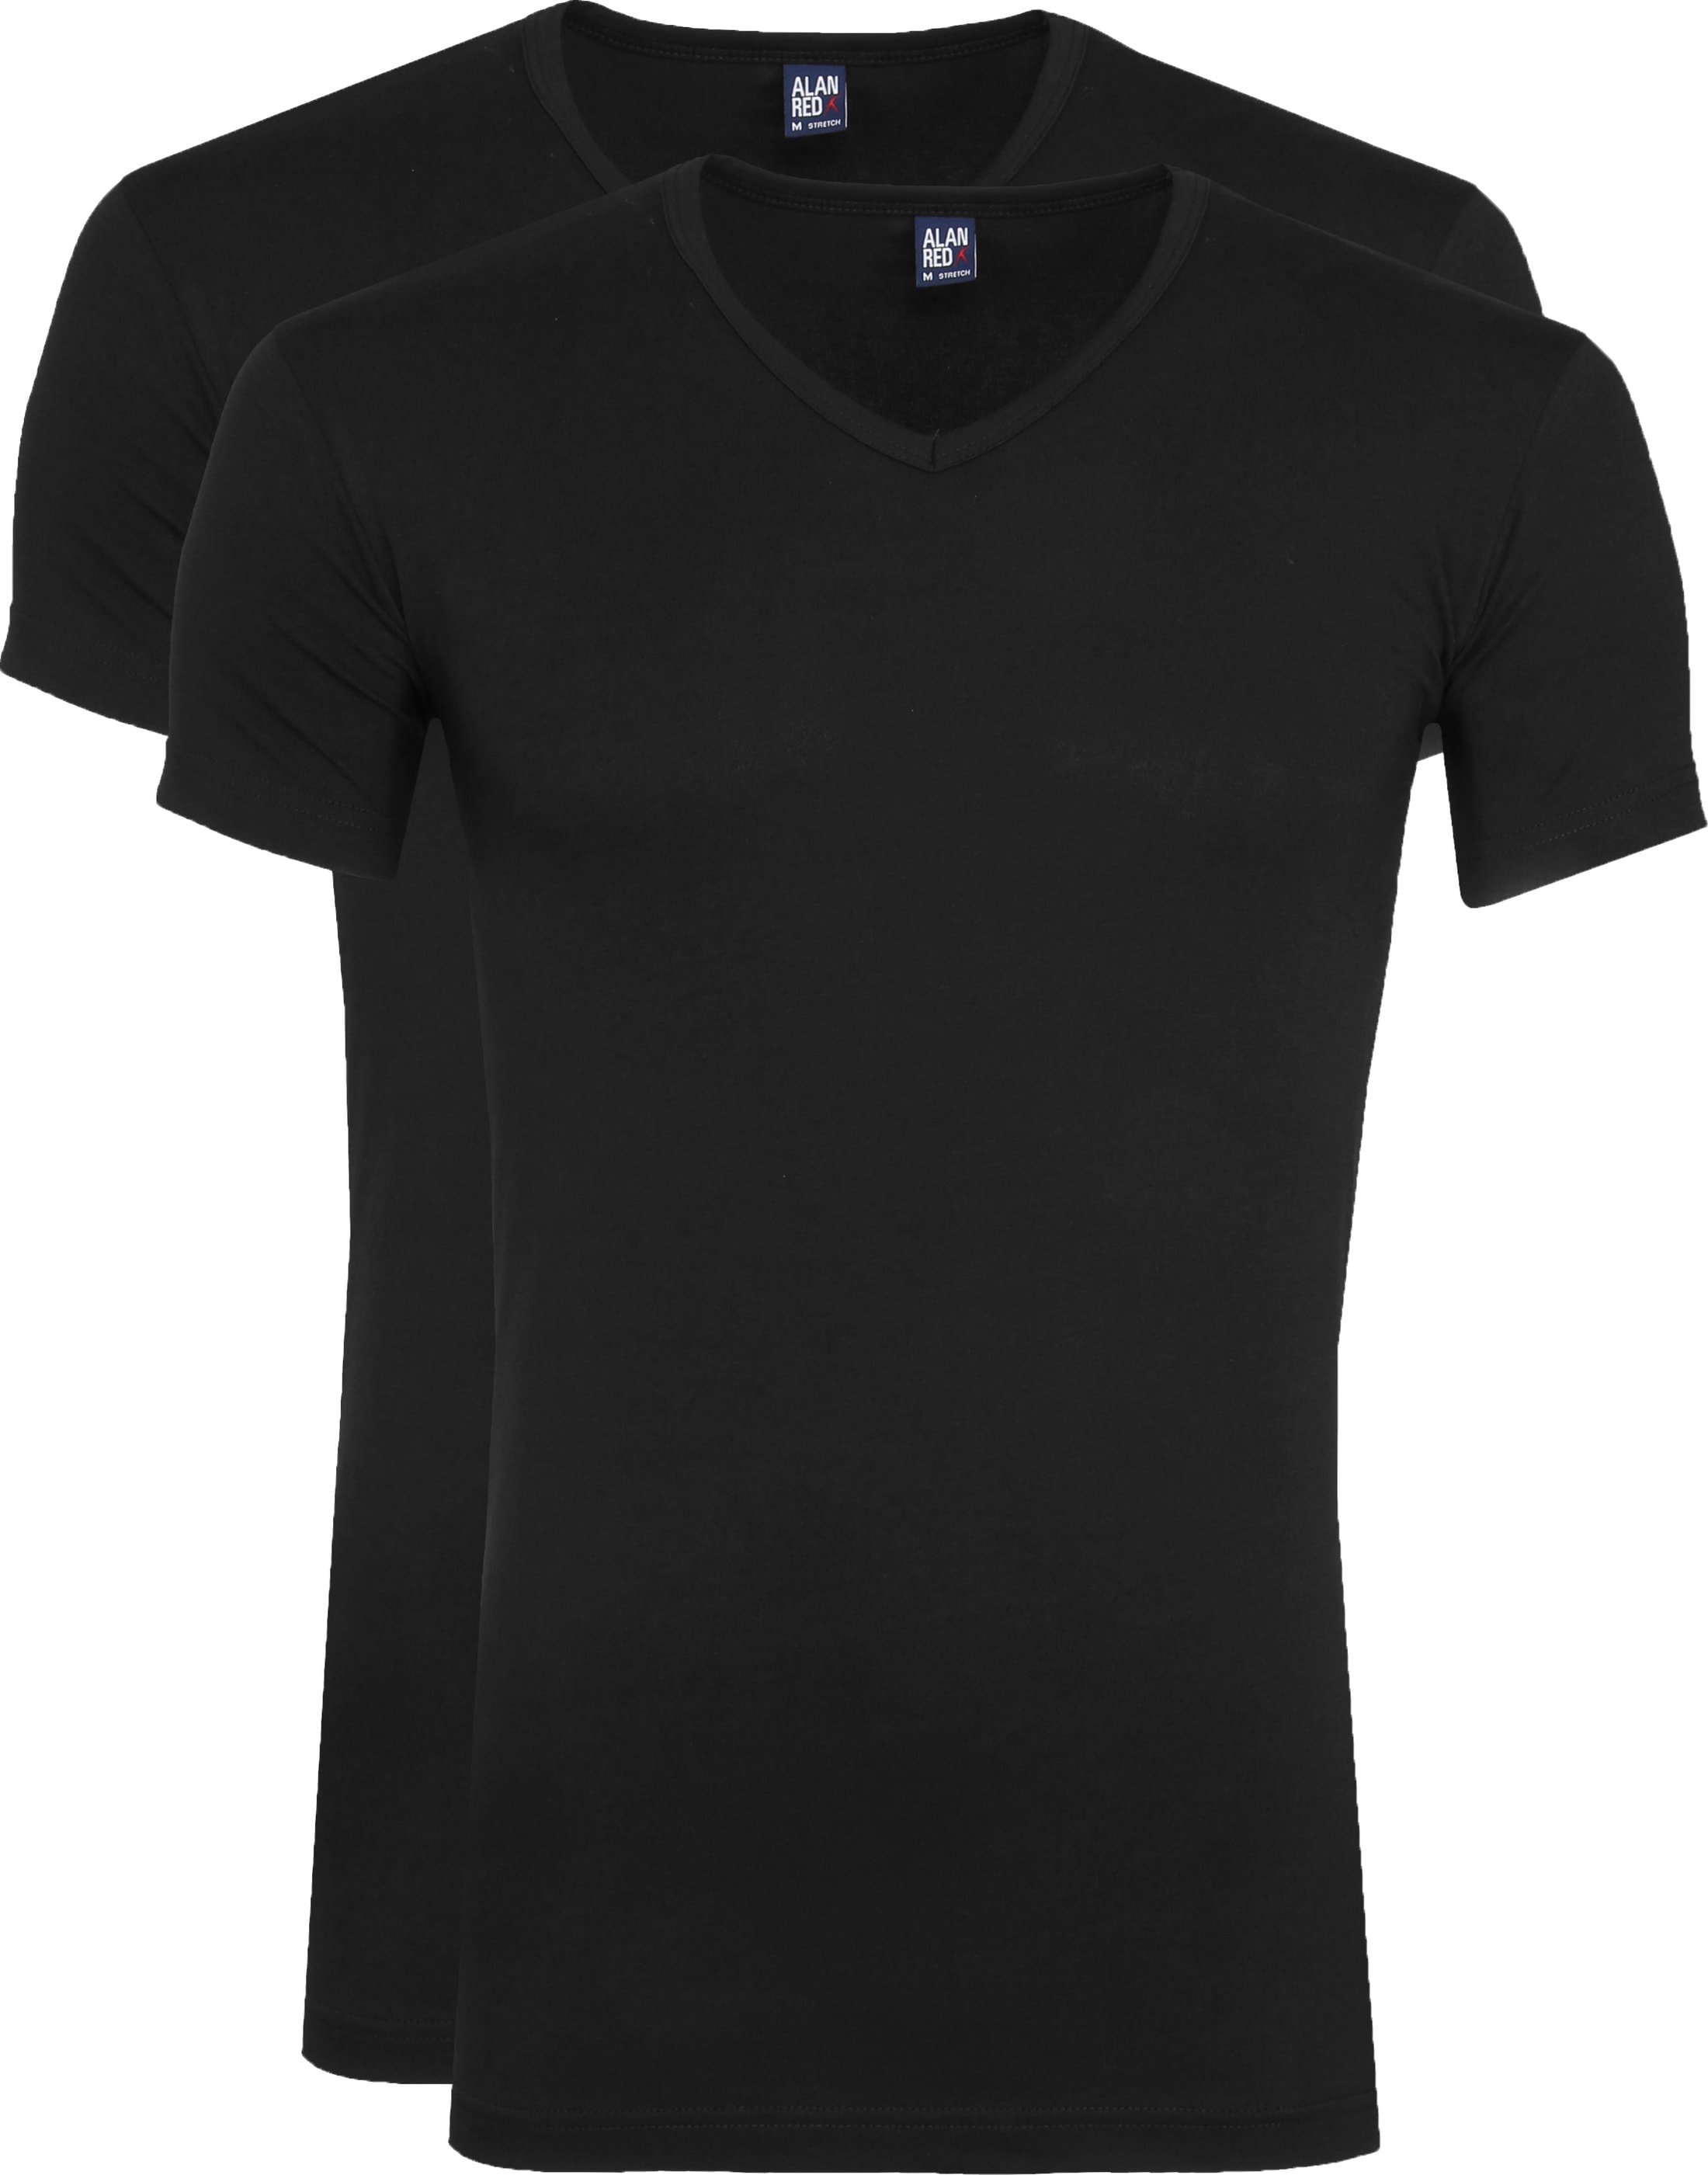 Oklahoma T-Shirt Stretch Zwart (2-Pack)